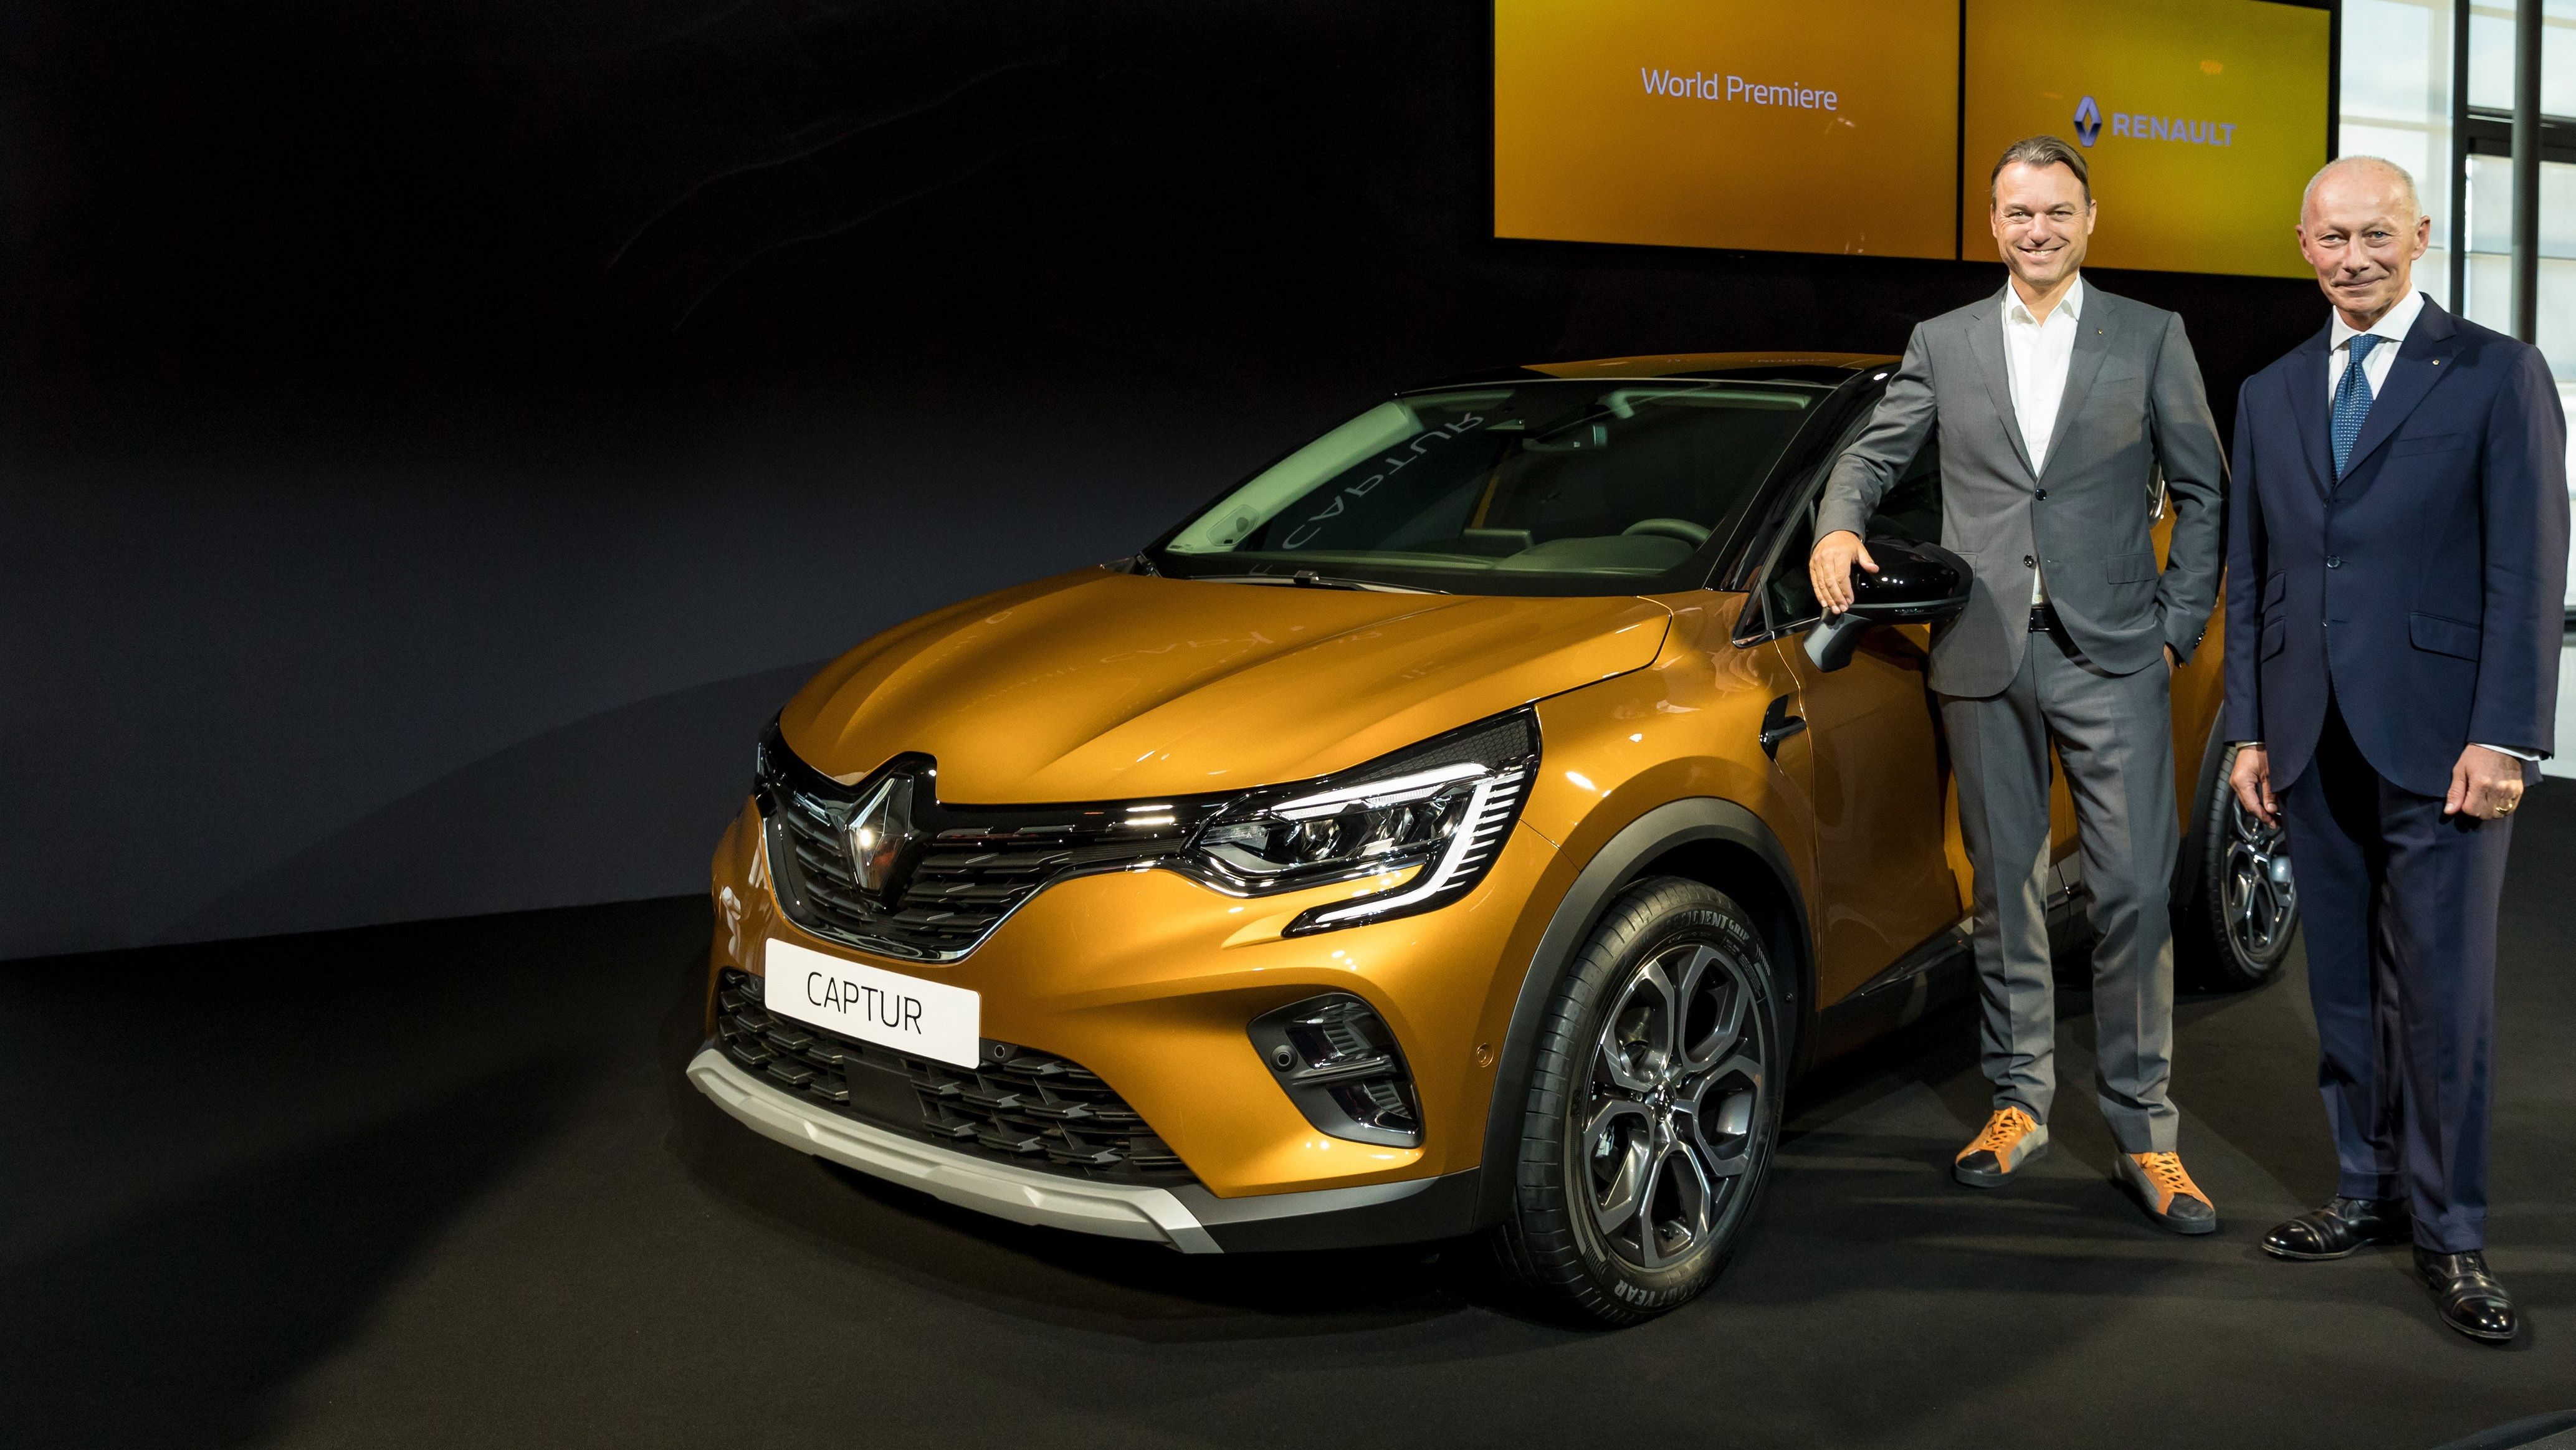 2019 All-new 2019 Renault Captur bows in Frankfurt with new platform, plug-in hybrid variant